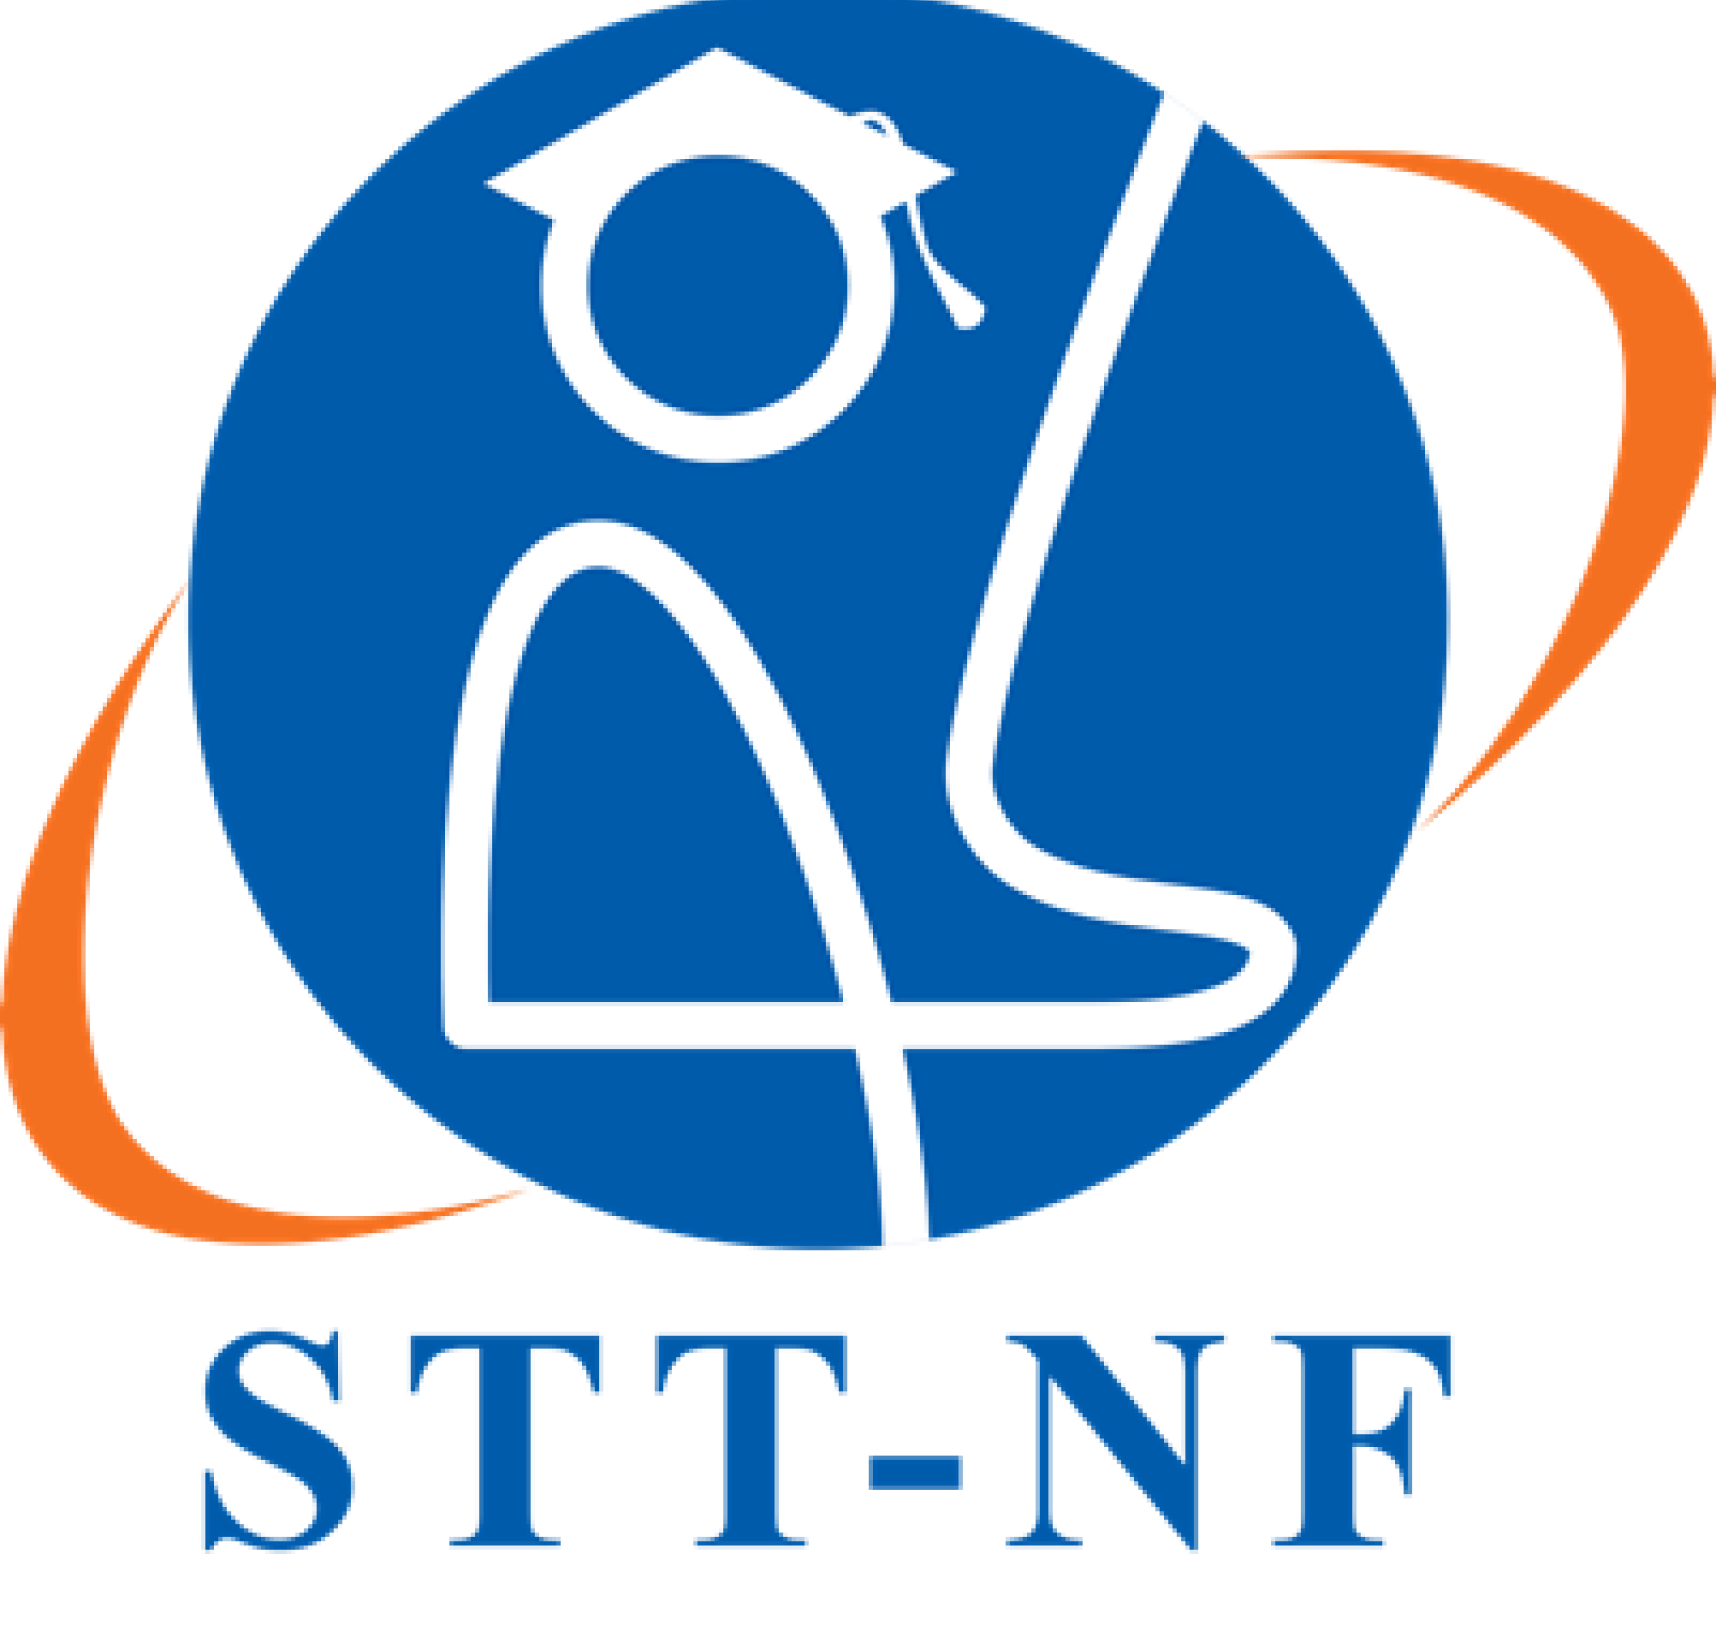 STT-NF